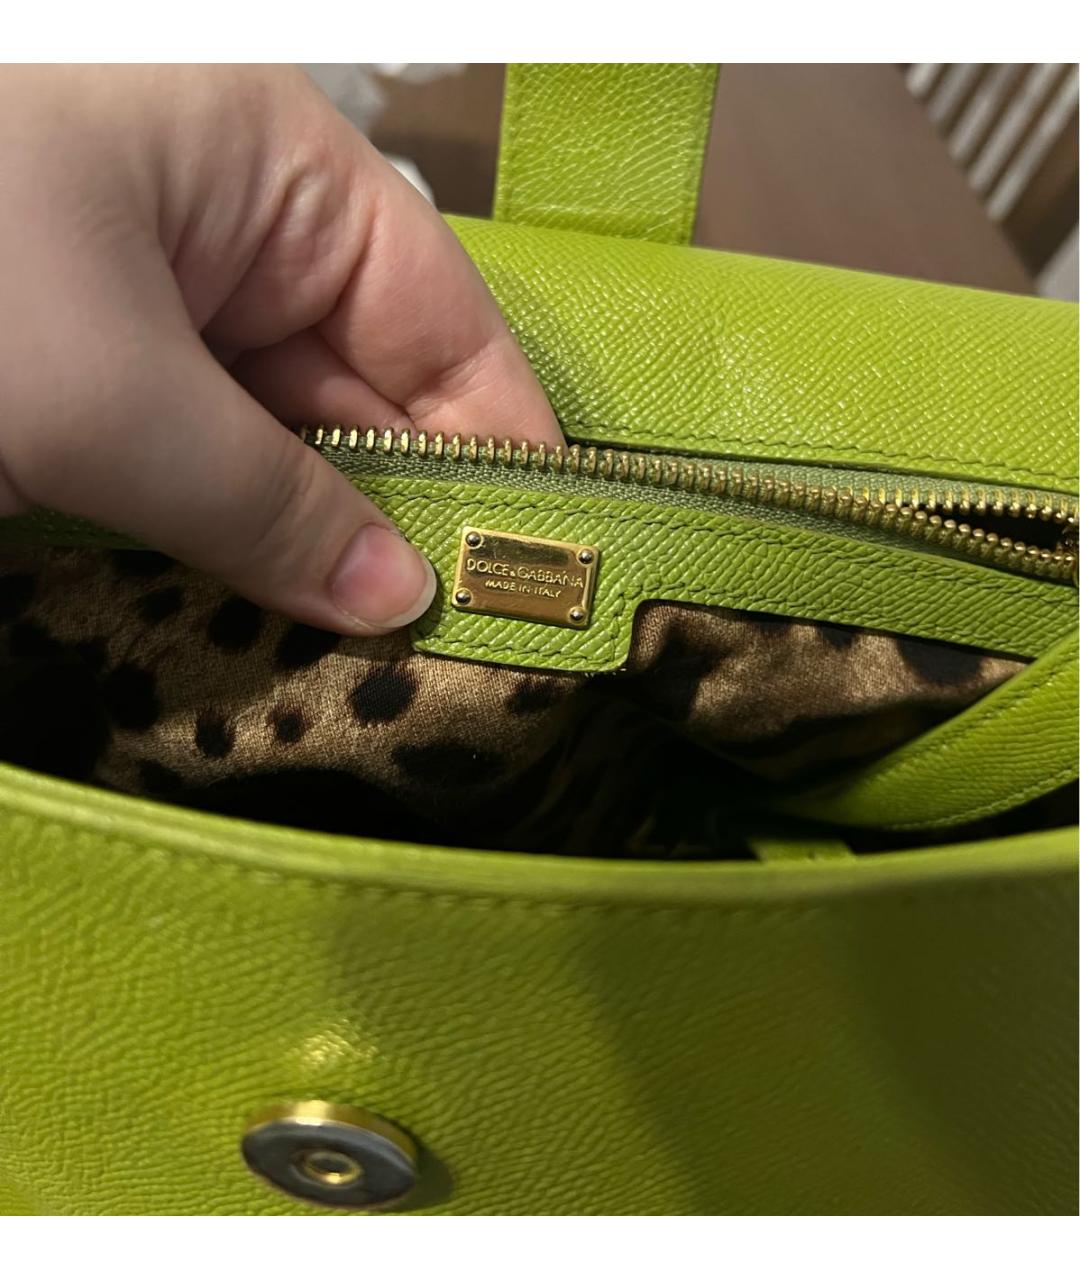 DOLCE&GABBANA Зеленая кожаная сумка с короткими ручками, фото 6